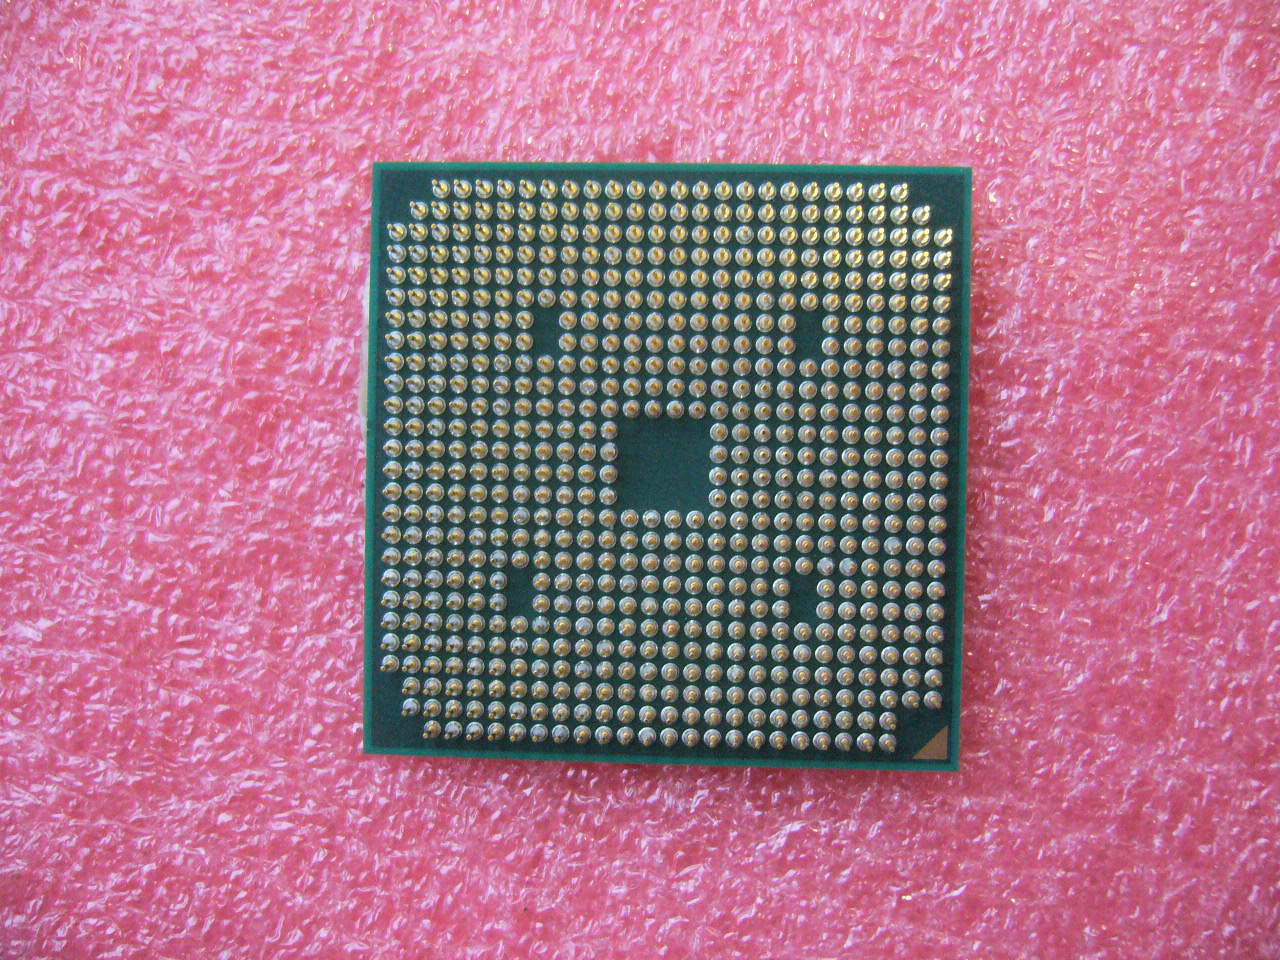 QTY 1x AMD Athlon II P340 2.2GHz Dual-Core (AMP340SGR22GM) Laptop CPU Socket S1 - zum Schließen ins Bild klicken